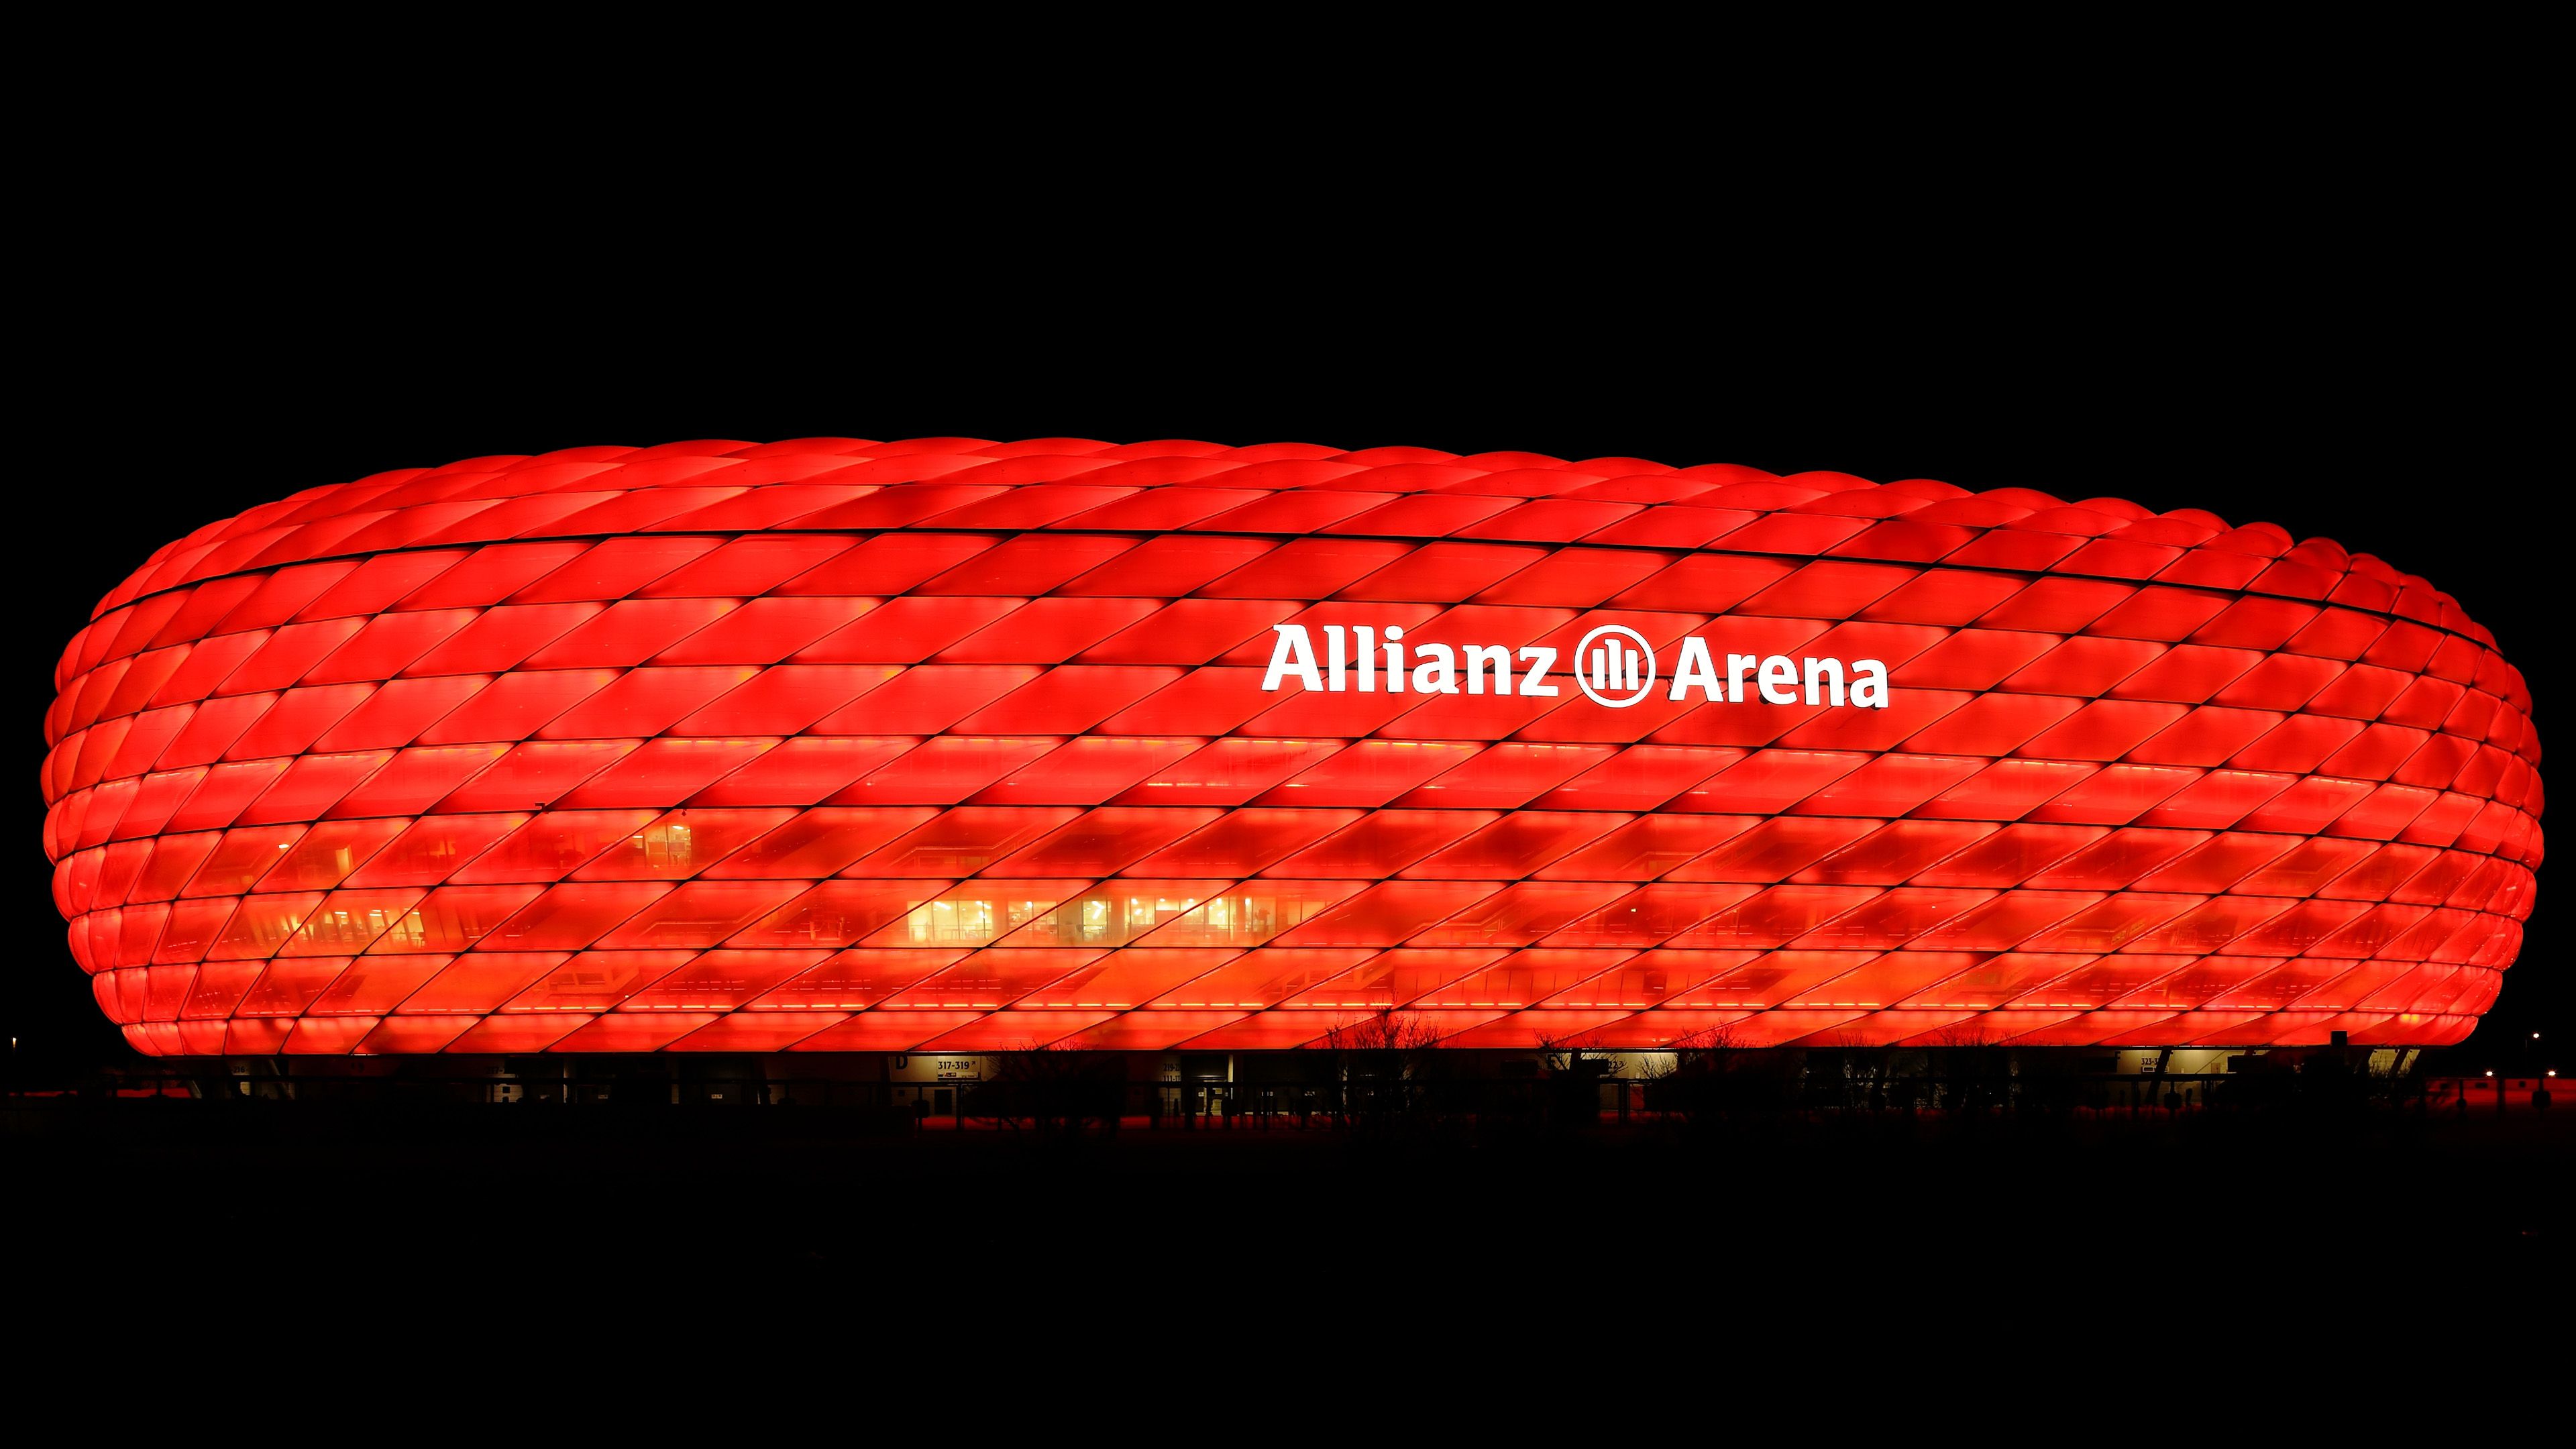 Fc Bayern Munchen Illuminated Allianz Arena Wallpaper